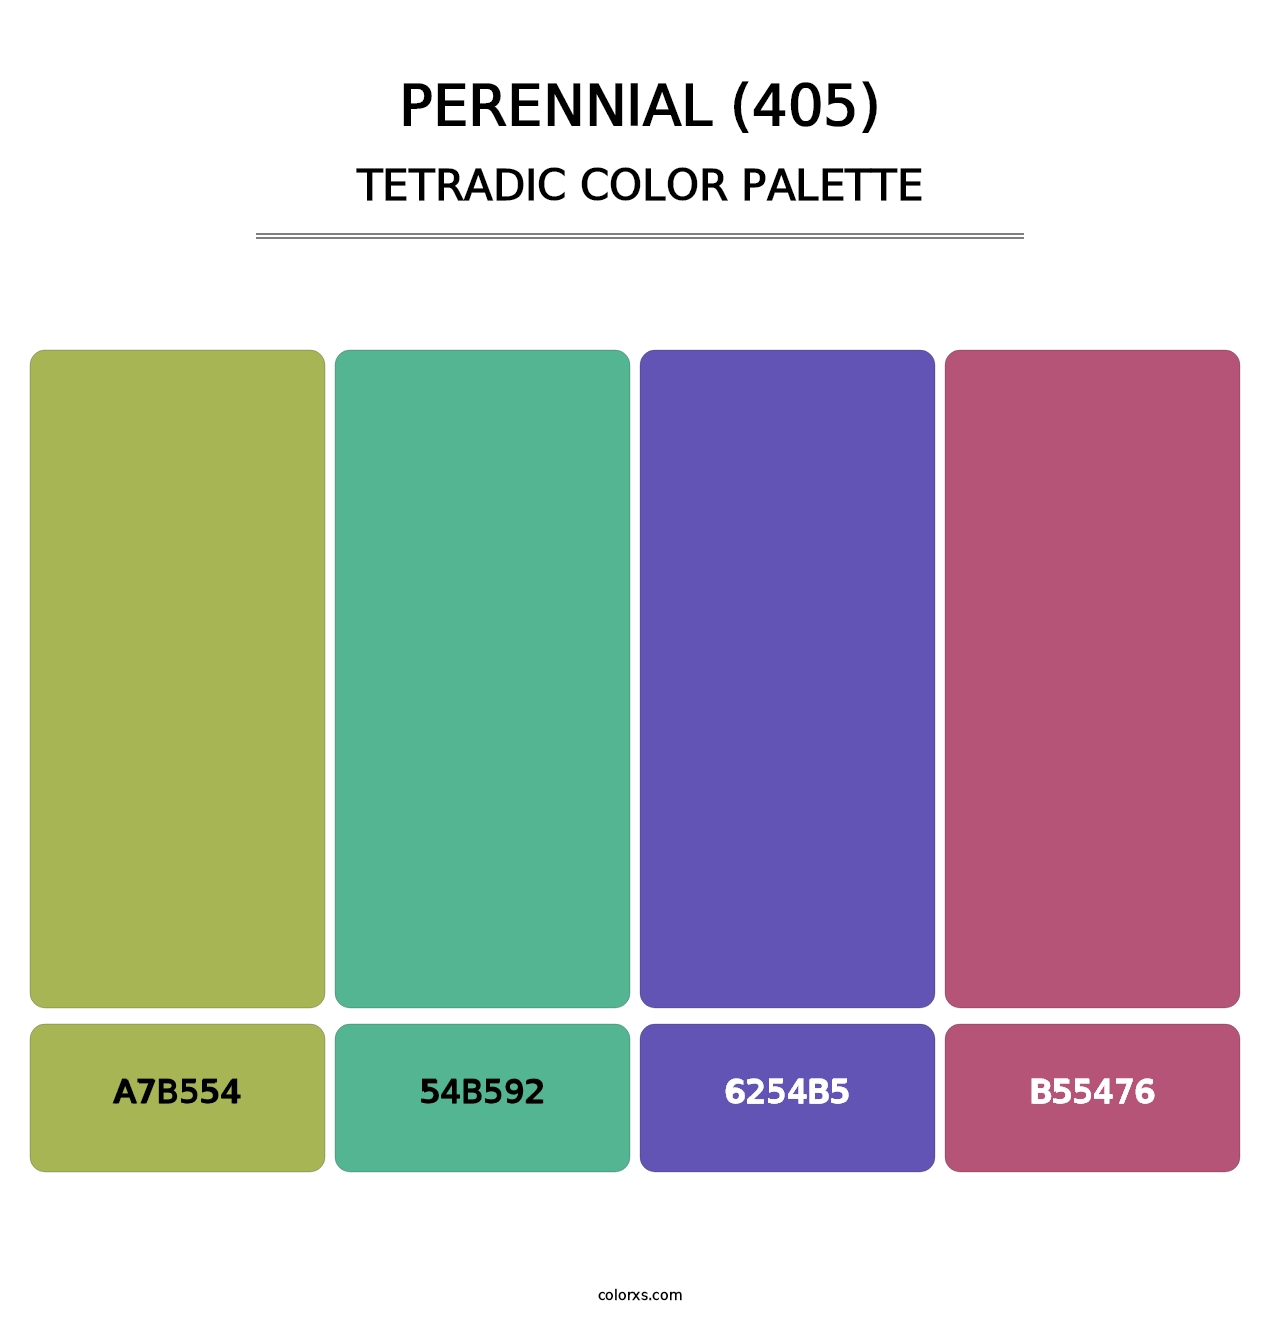 Perennial (405) - Tetradic Color Palette